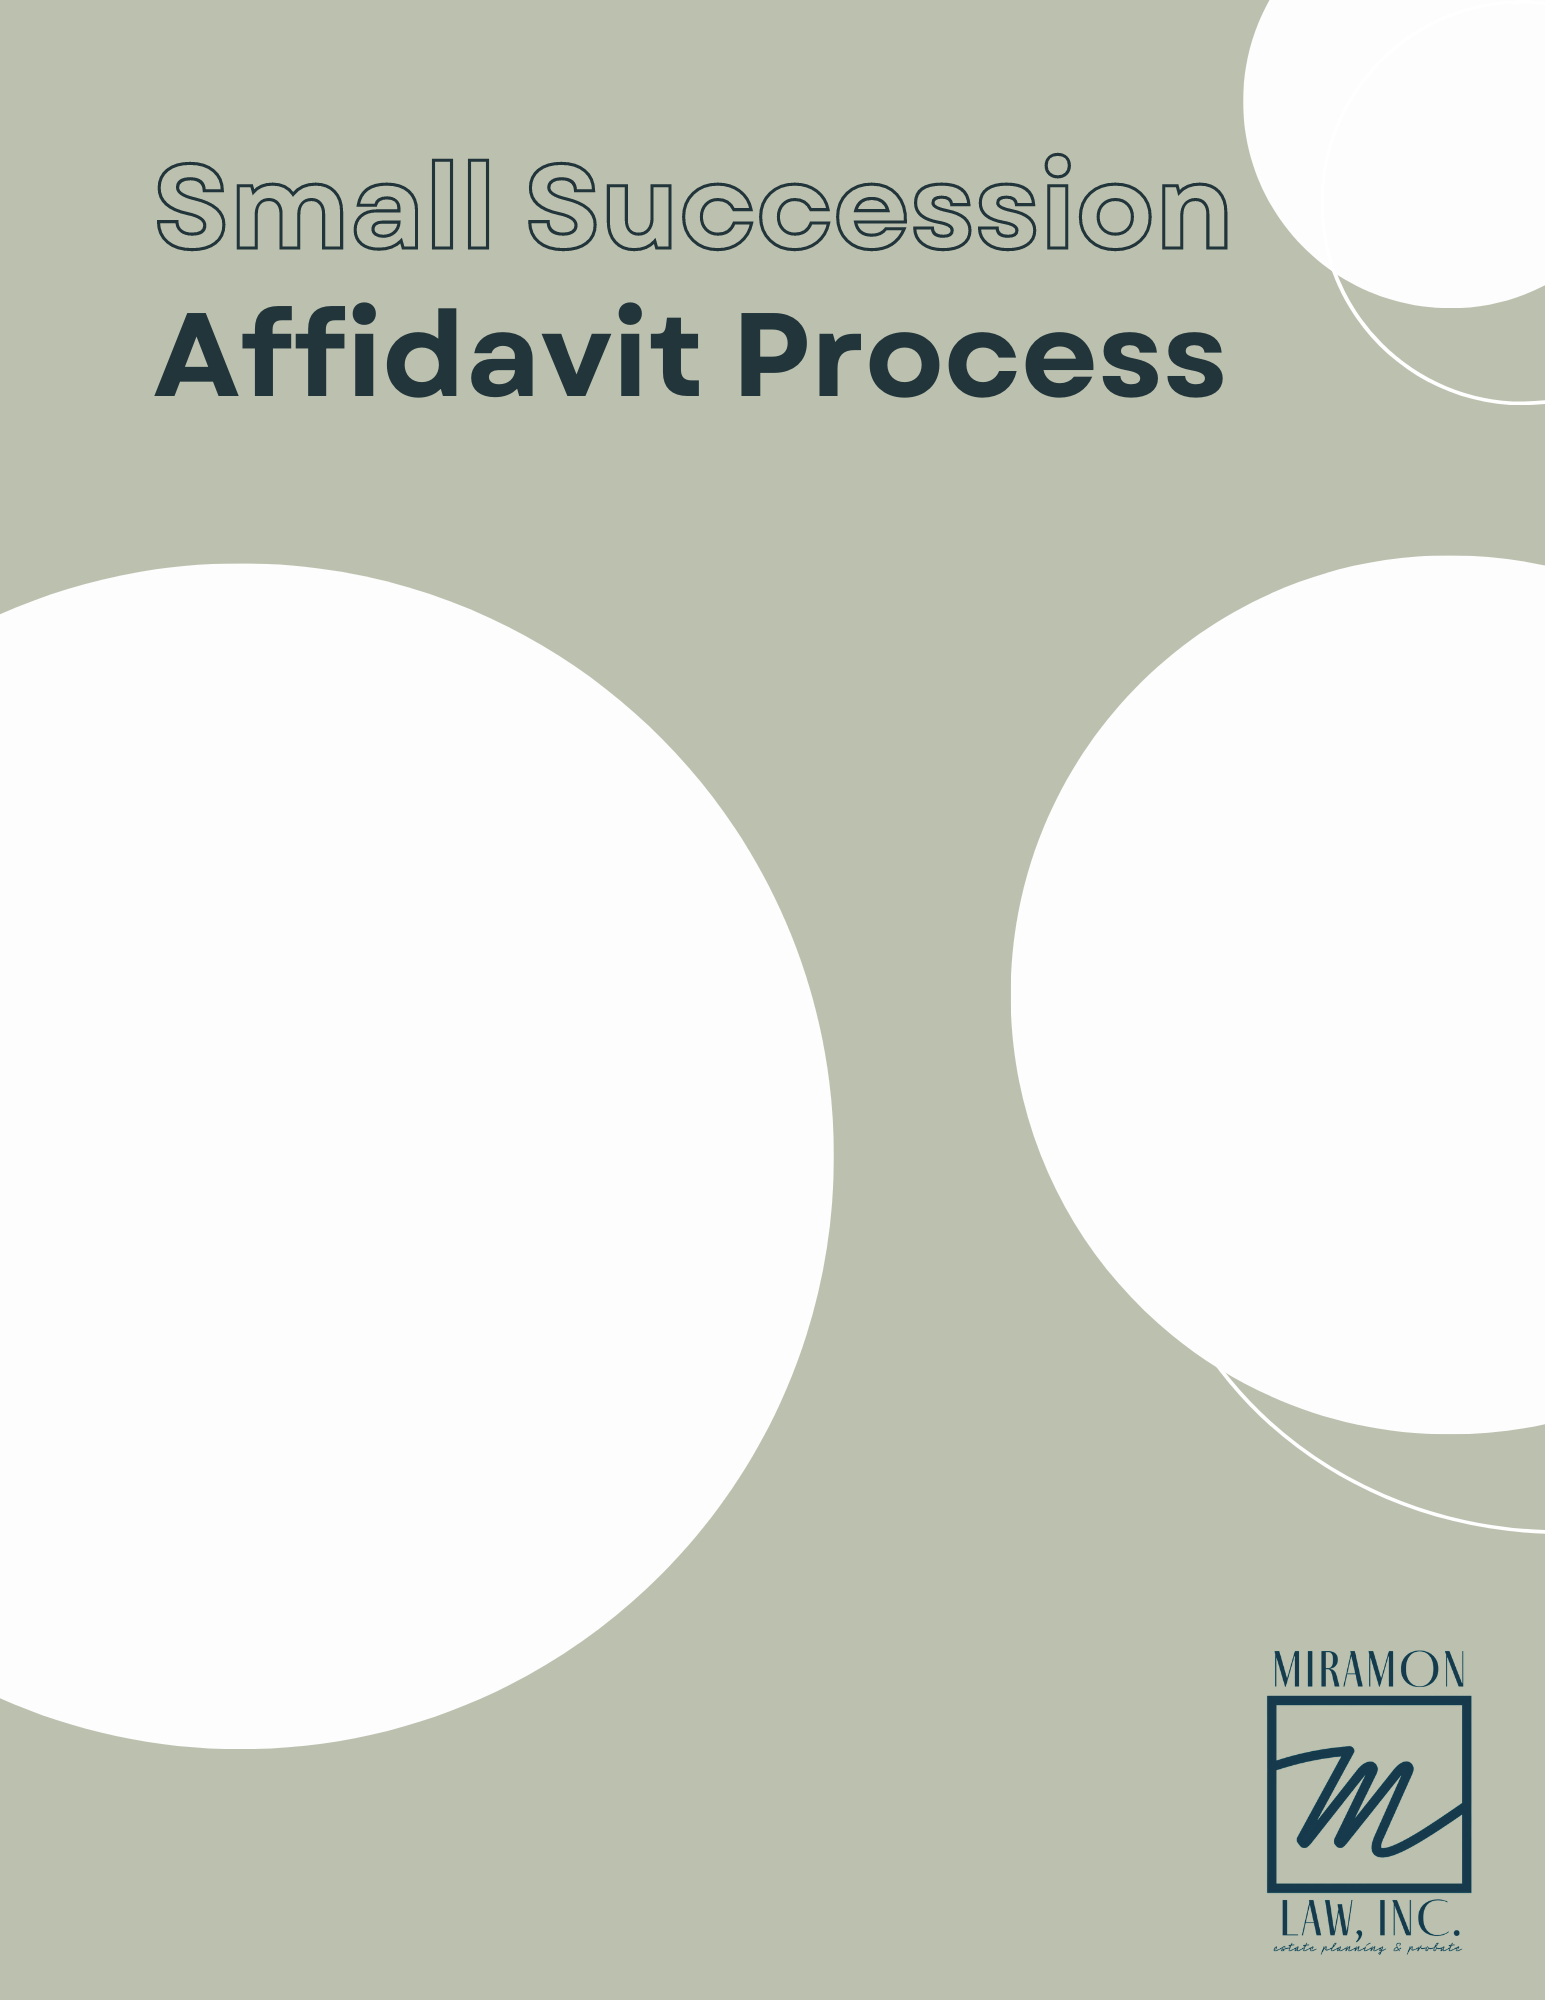 Small Succession Affidavit Process